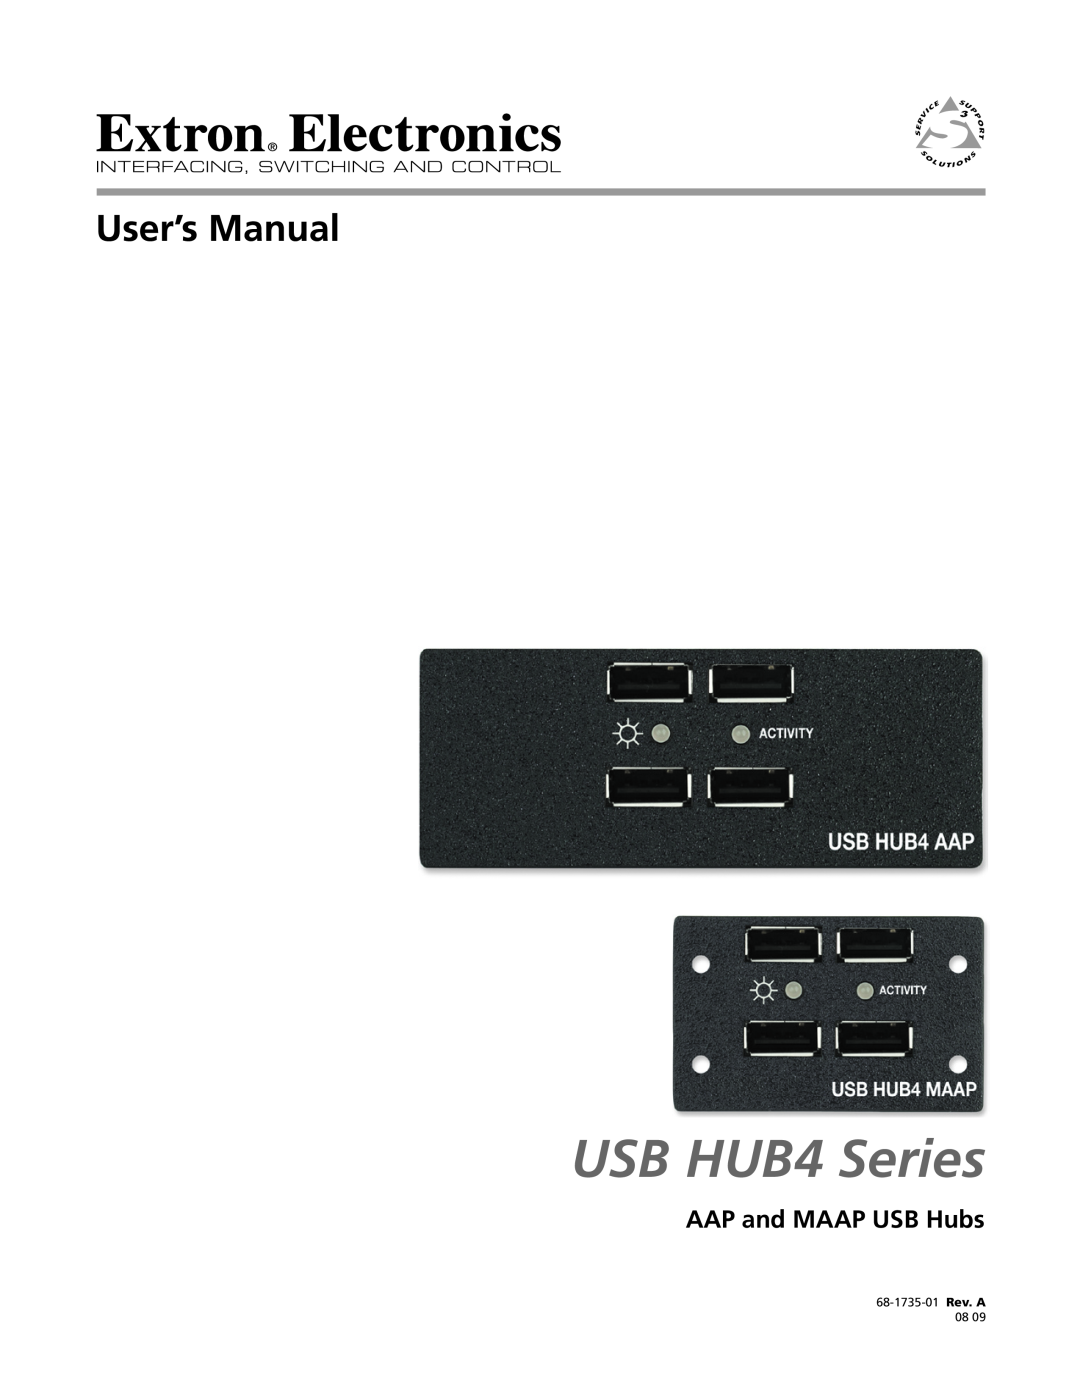 Extron electronic manual AAP and MAAP USB Hubs, USB HUB4 Series, 68-1735-01 Rev. A 